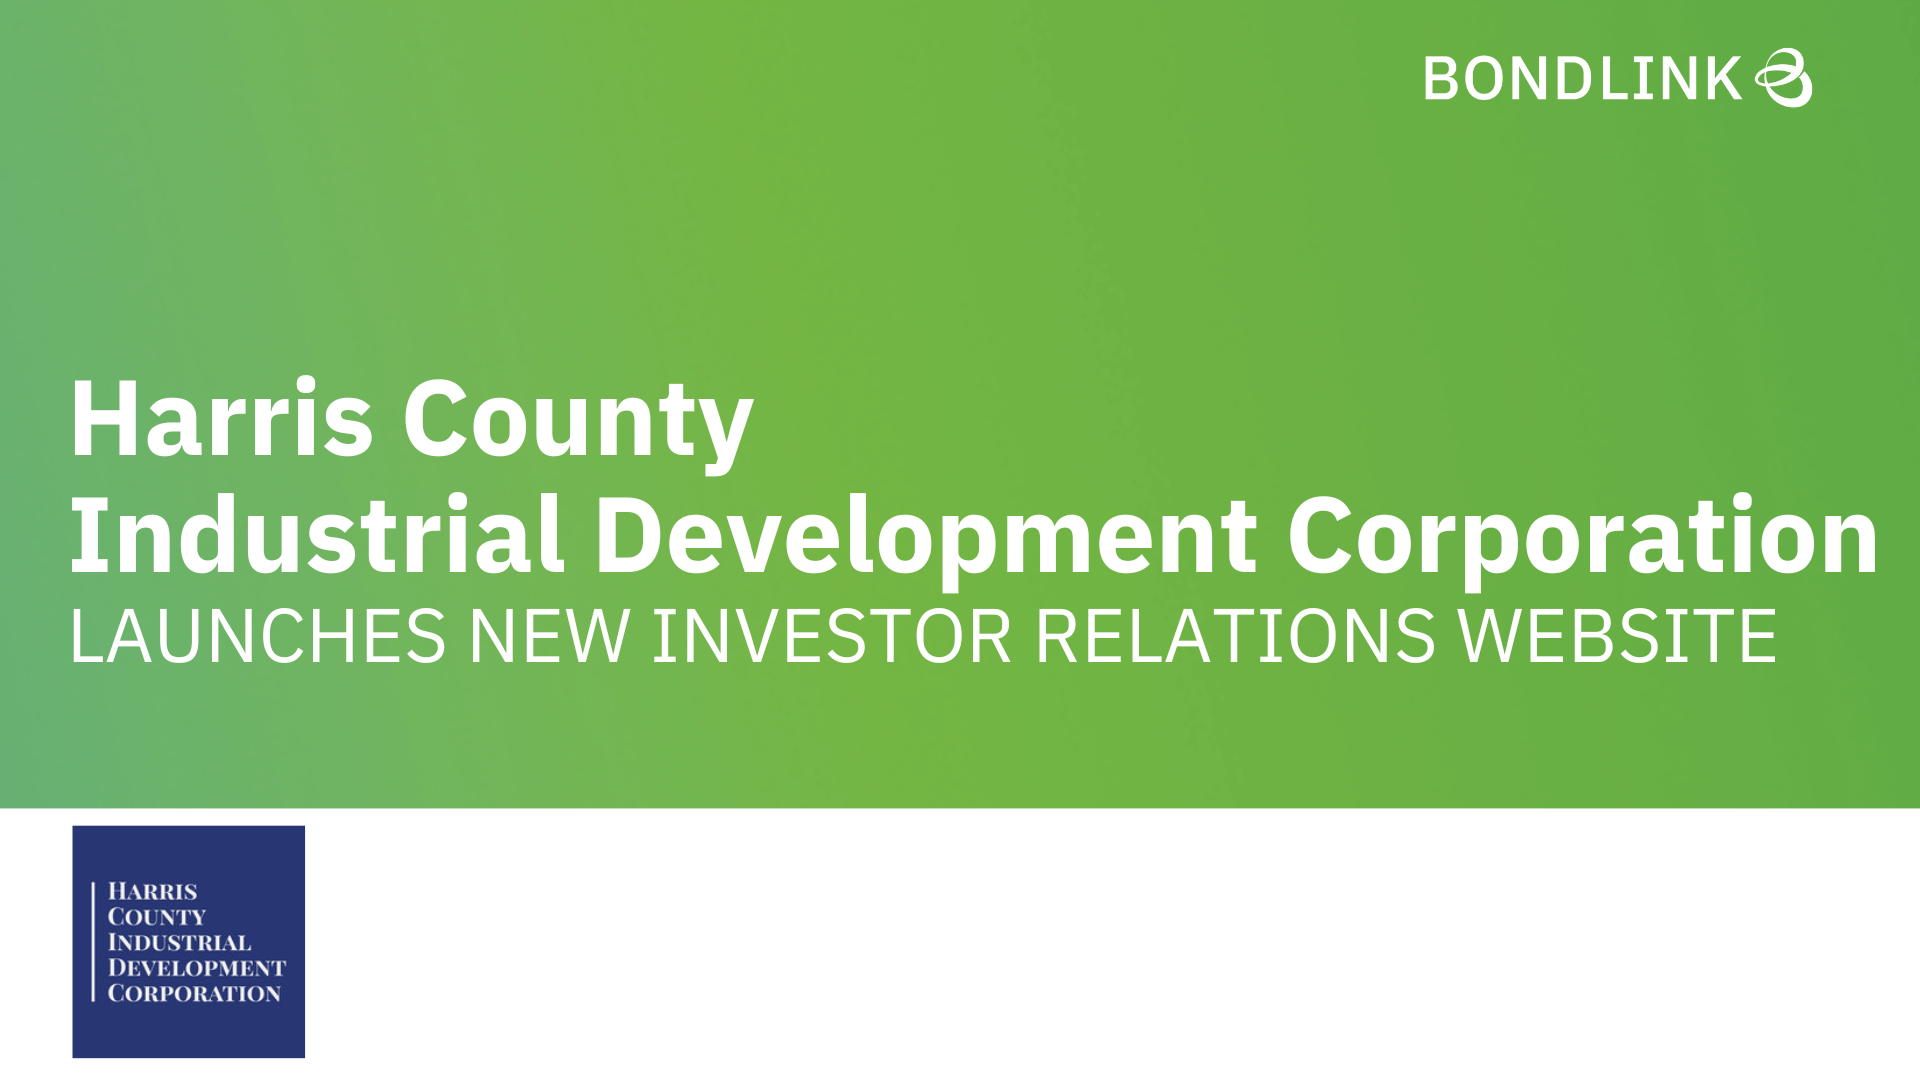 Harris County Industrial Development Corporation Launches Investor Relations Website